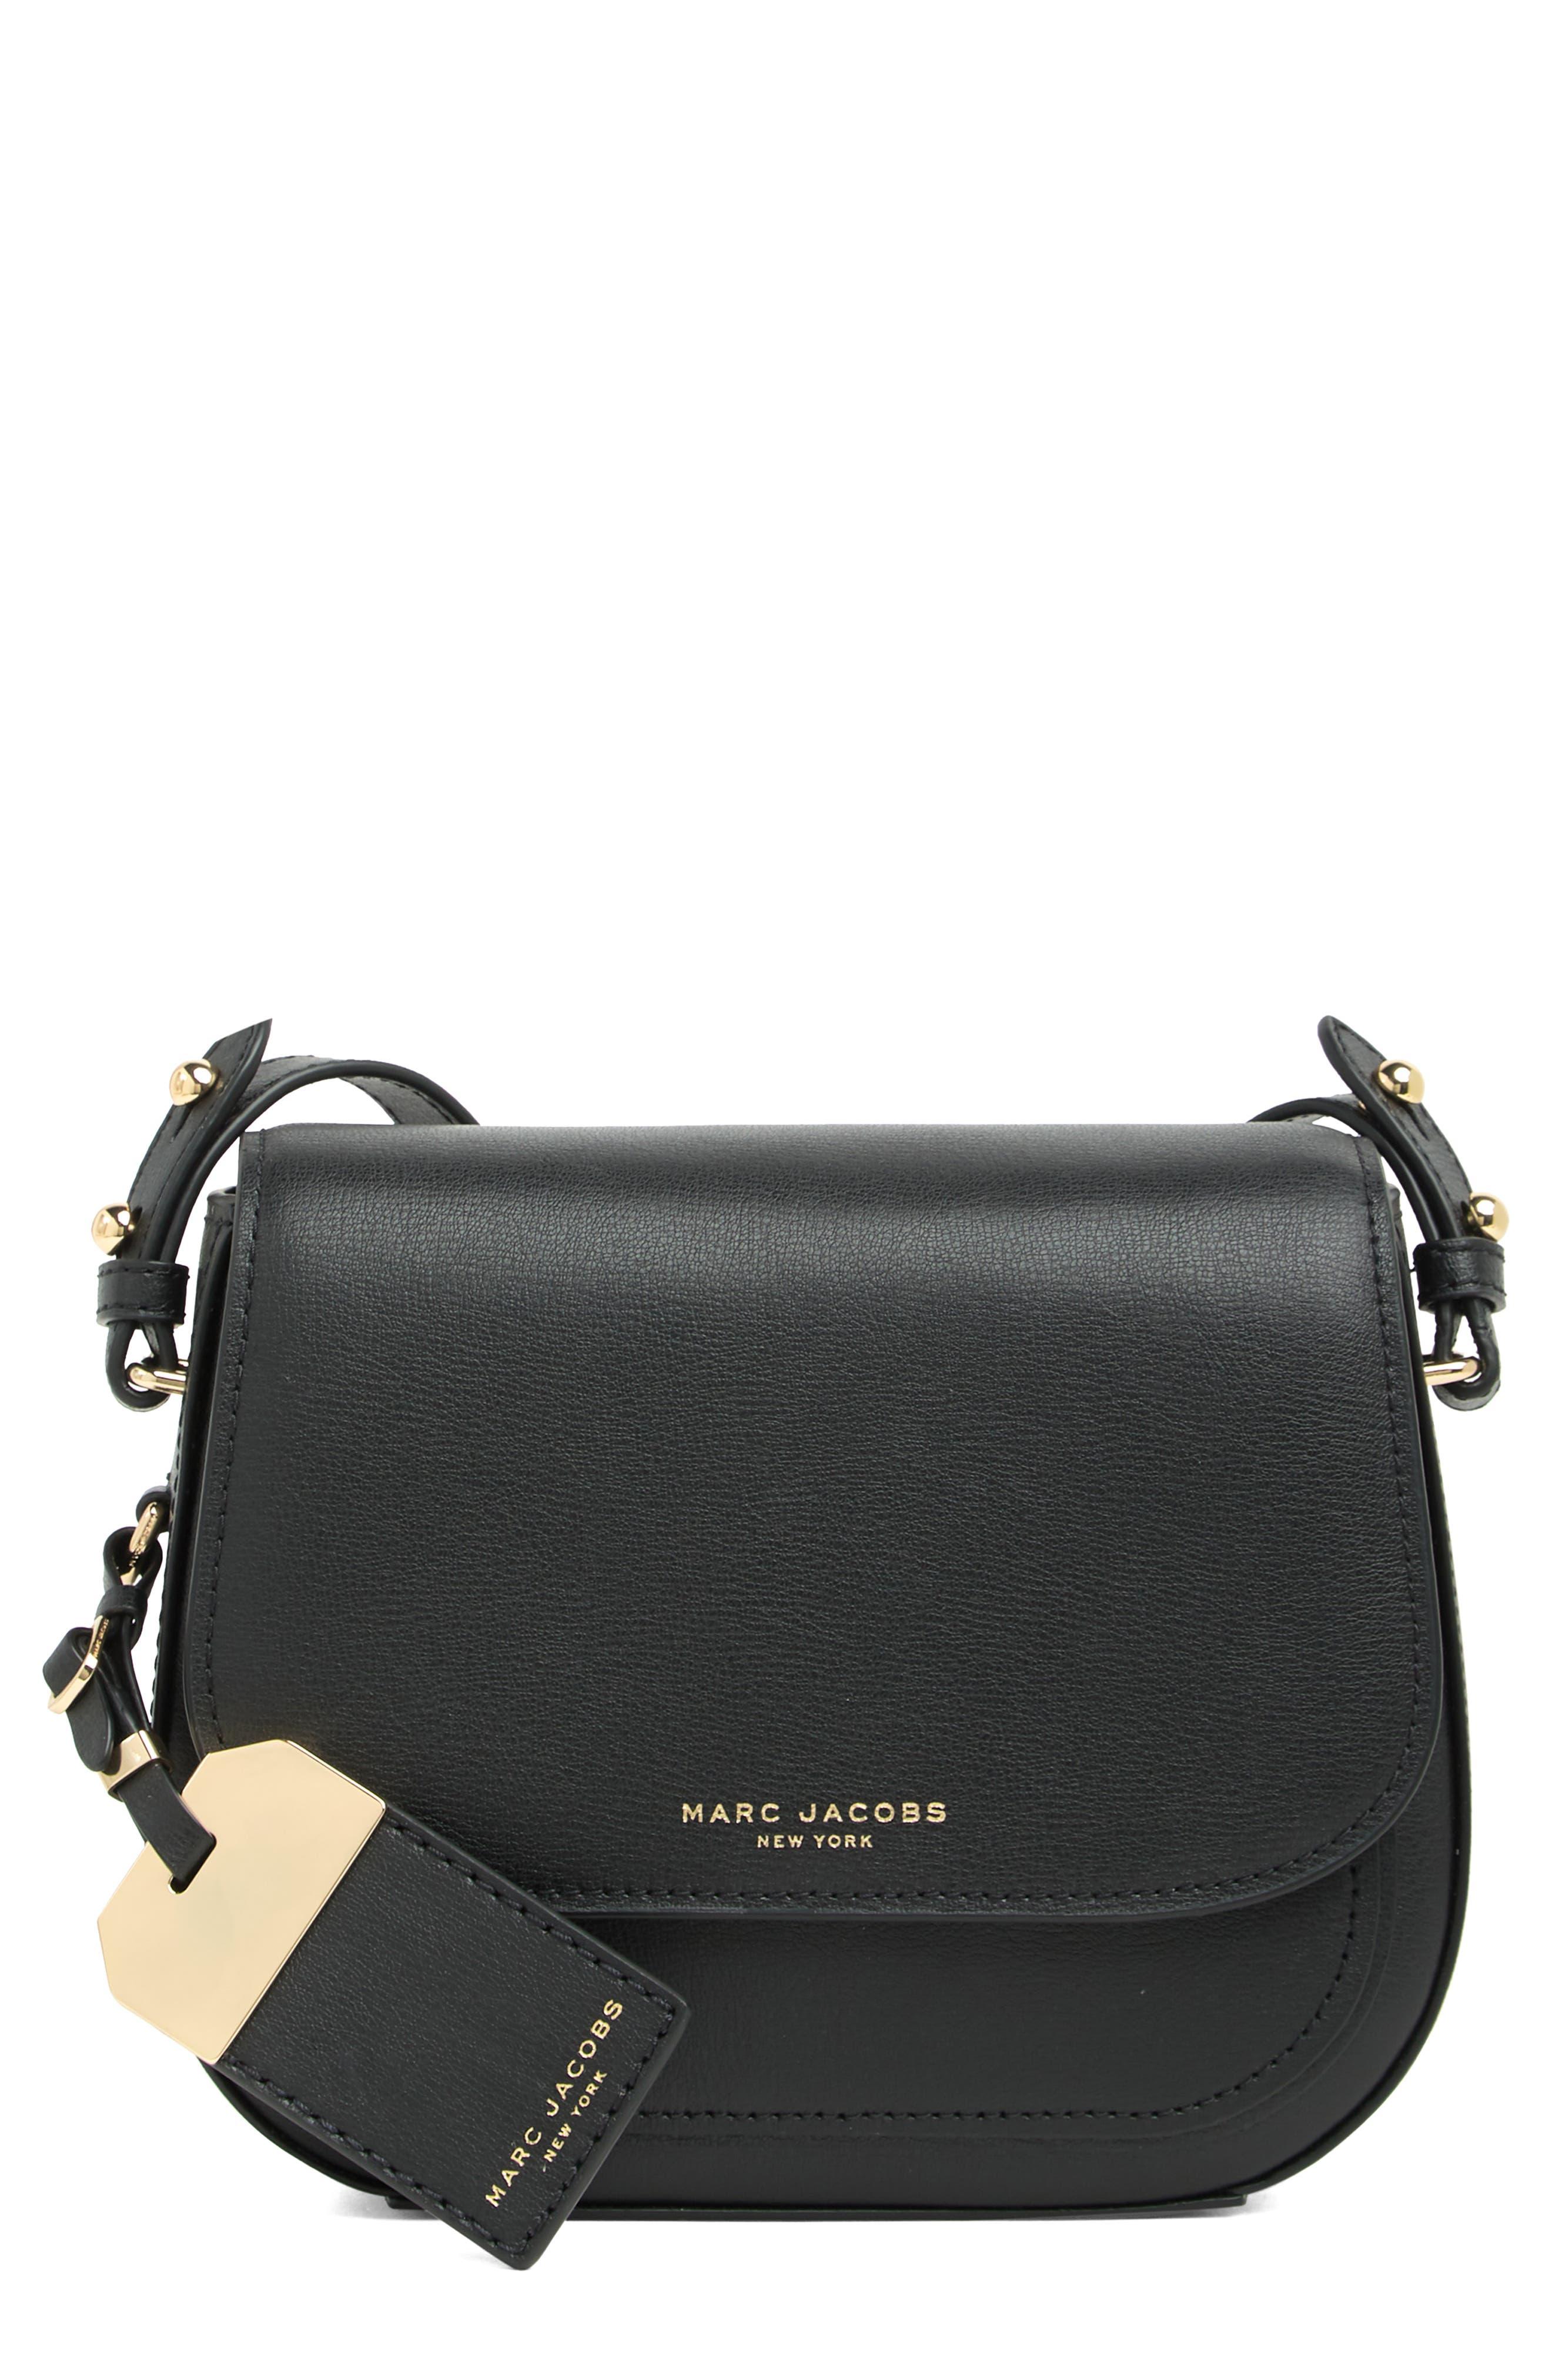 Marc Jacobs Women's Mini Cushion Bag, Black, One Size